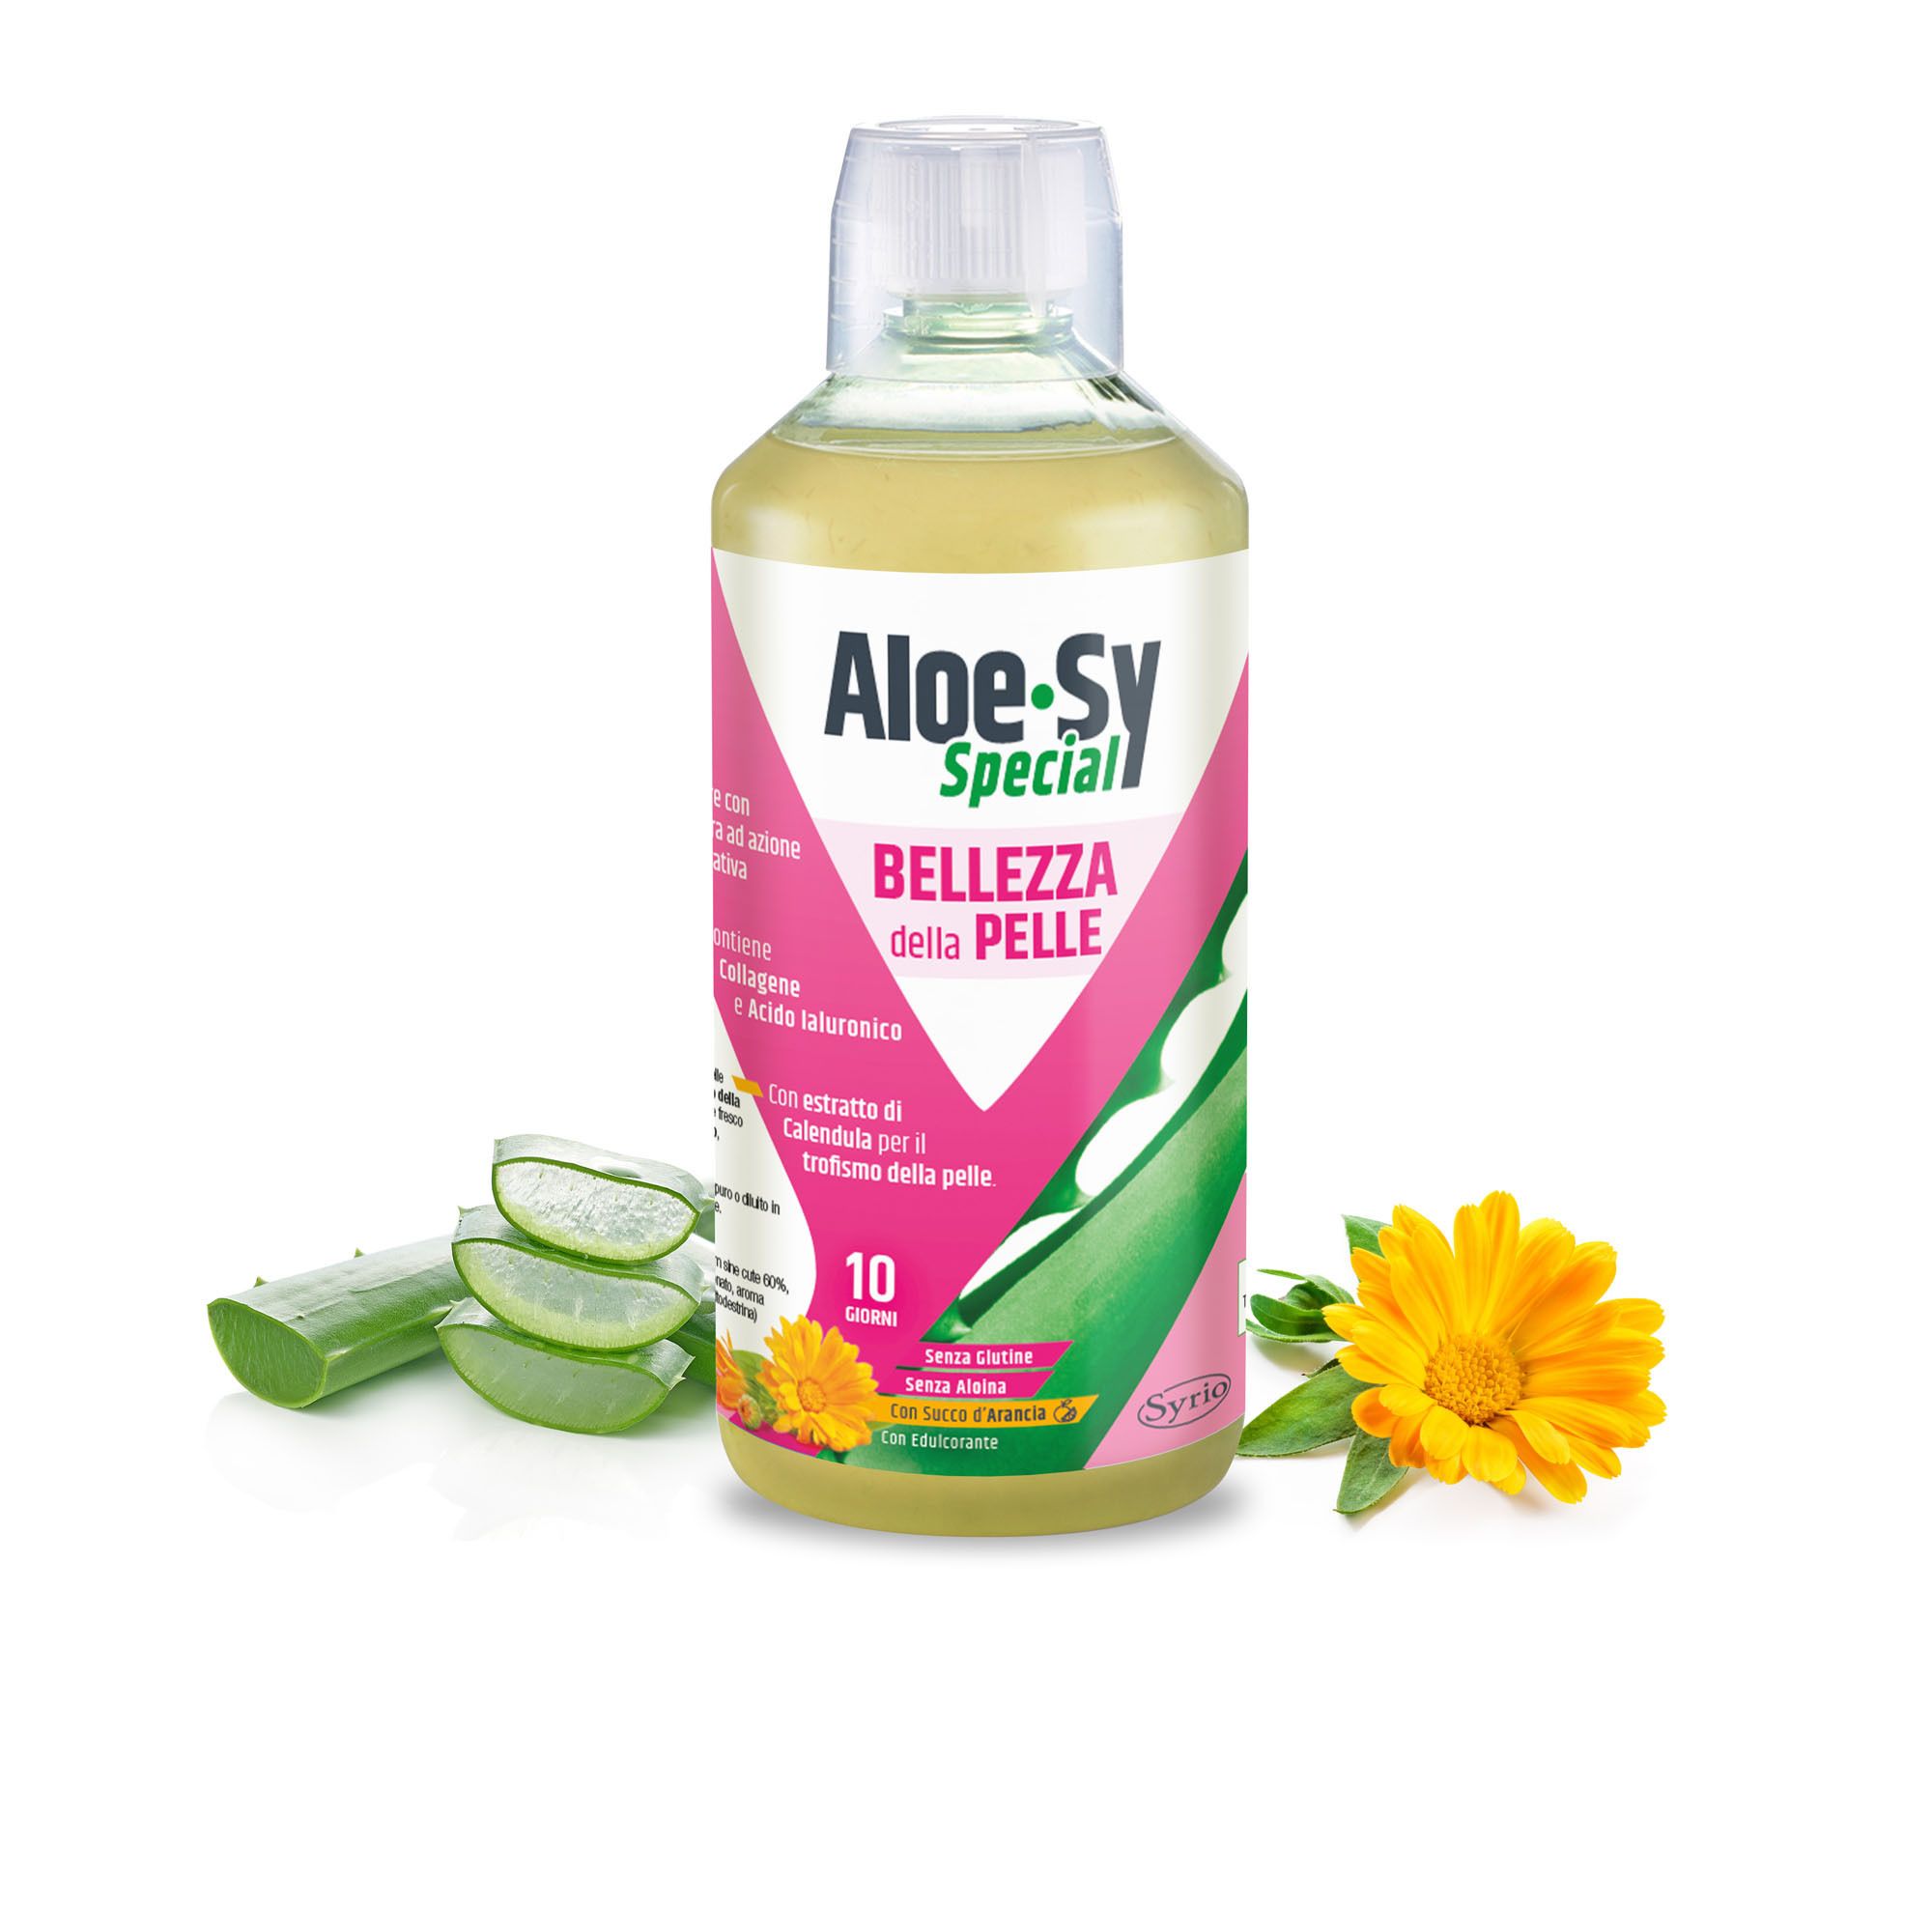 Image of Aloe-Sy Special: integratore alimentare Aloe in 3 varianti